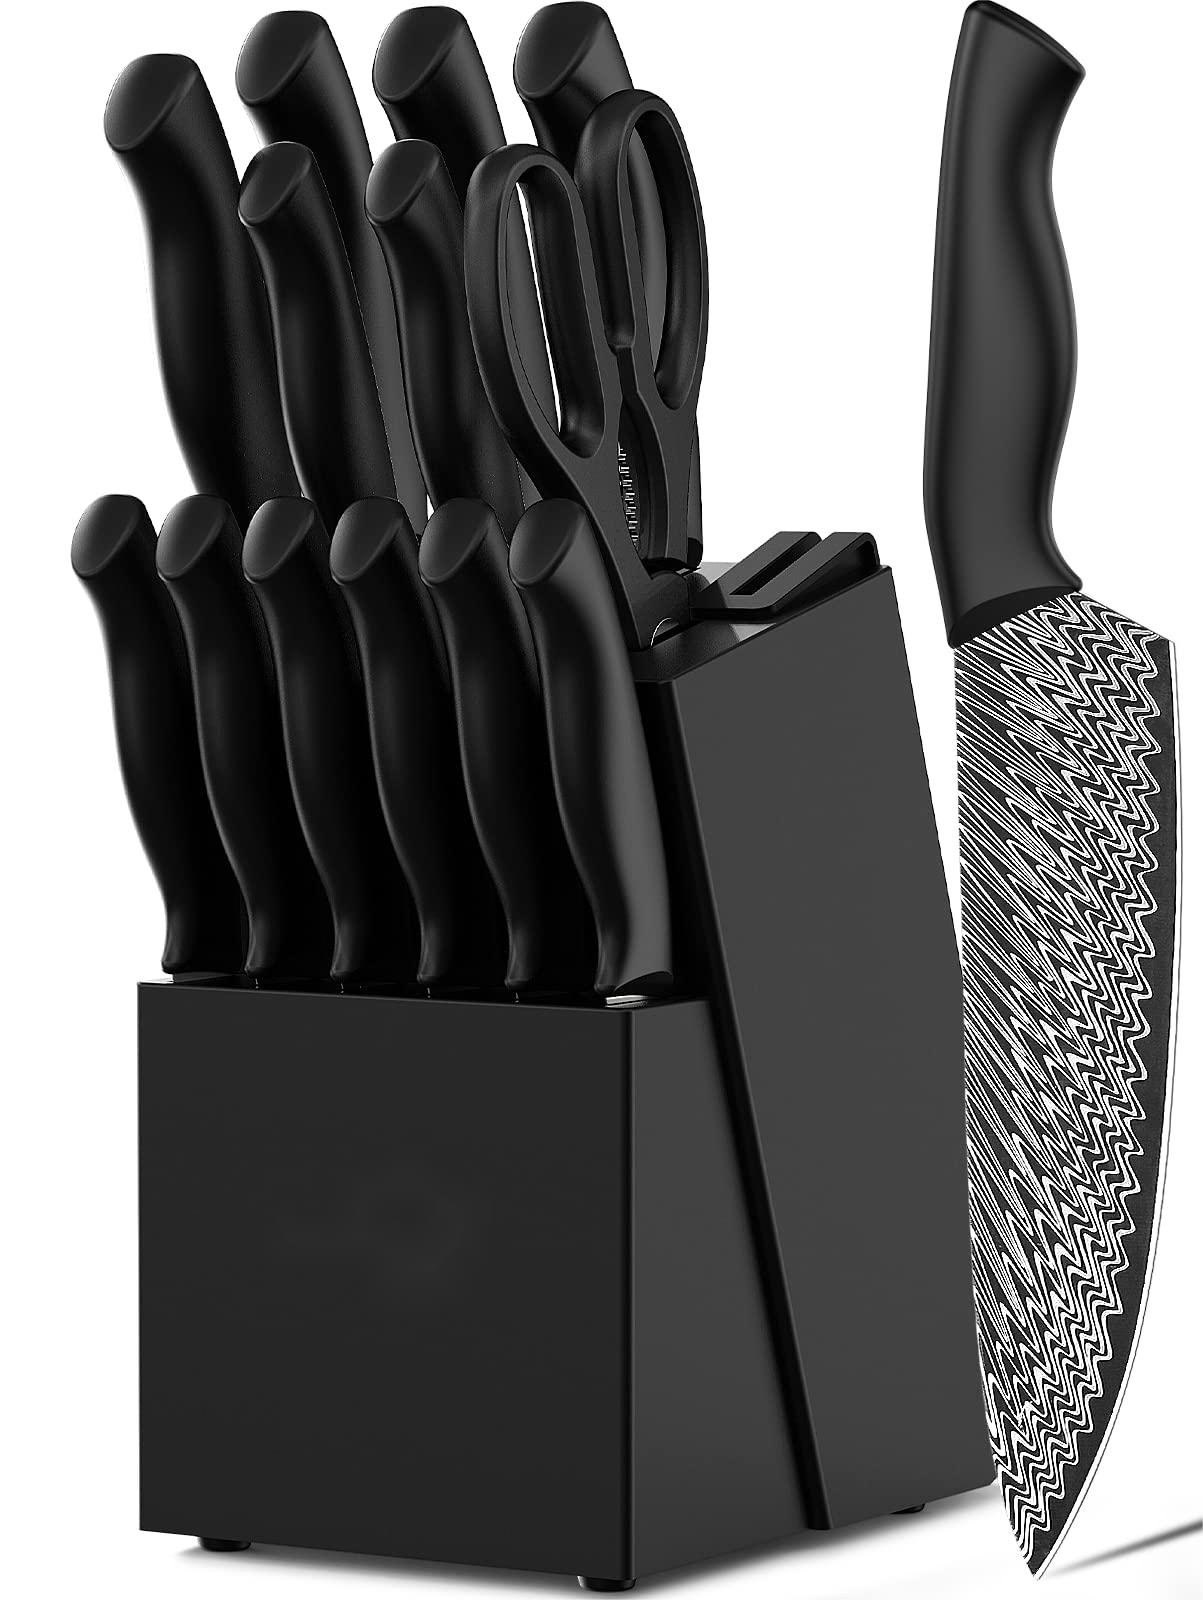 Kitchen Knife Set With Block: 8 Piece German 1.4116 High-Carbon